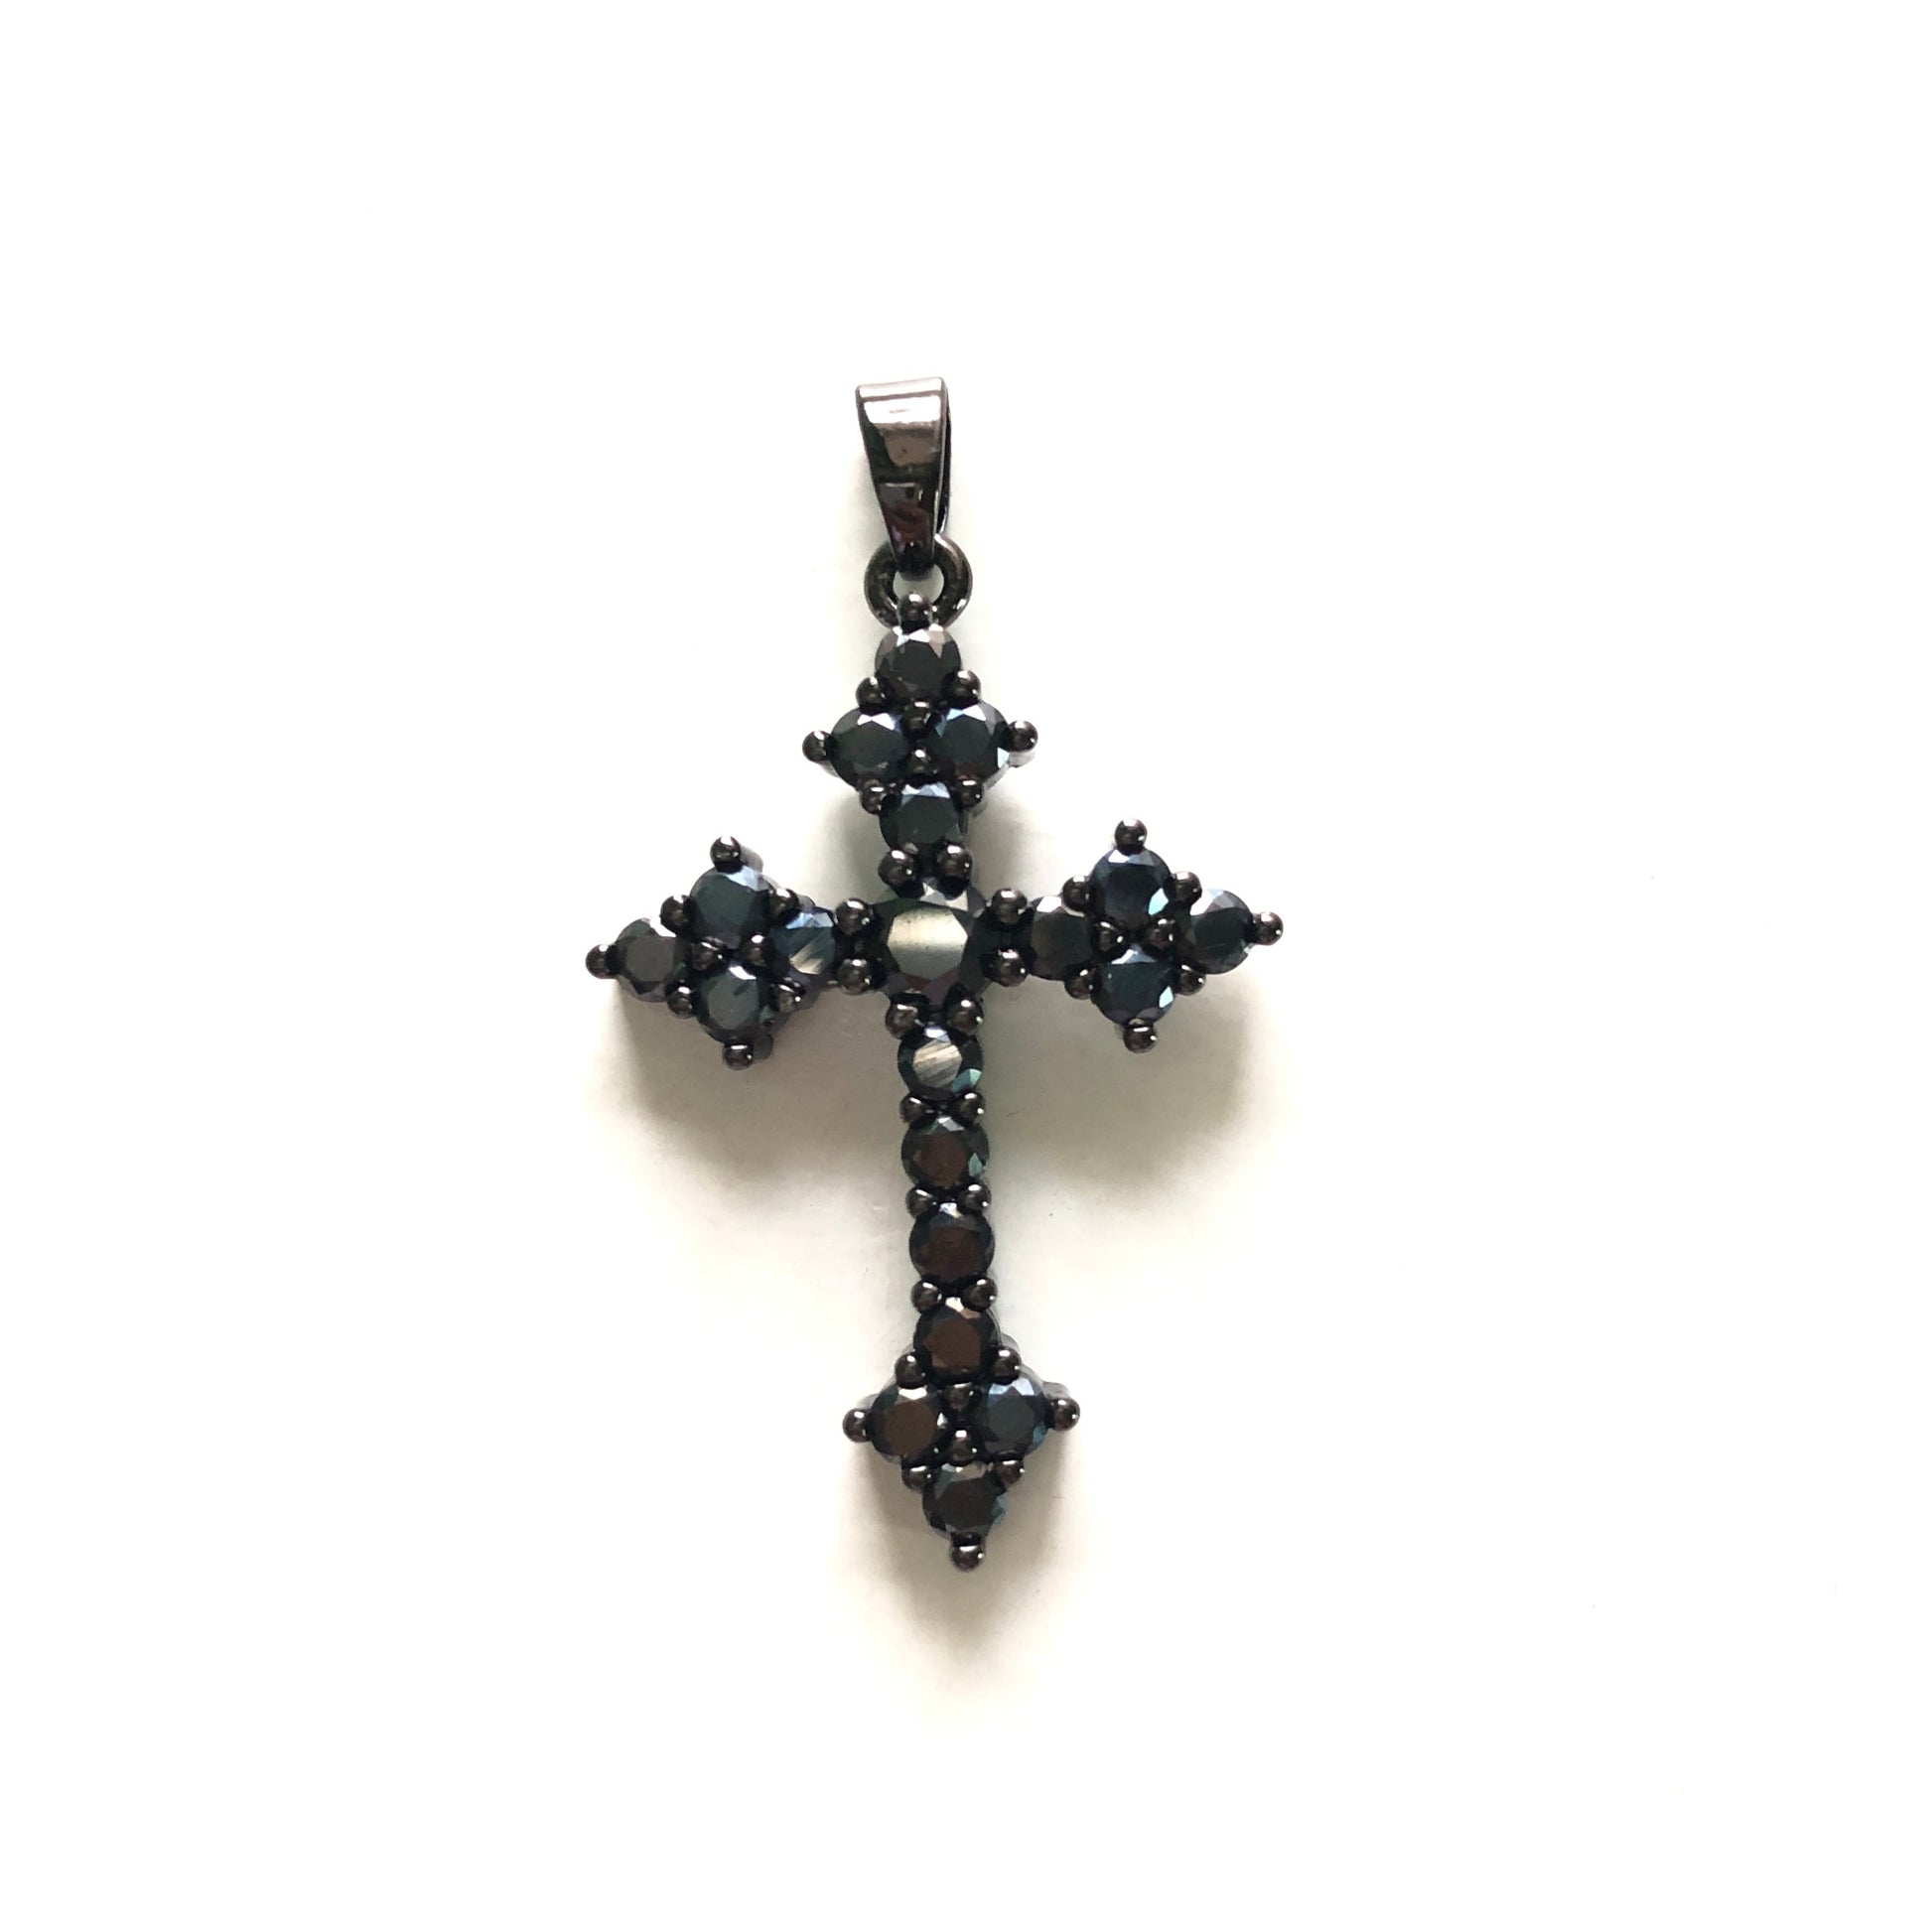 10pcs/lot 35*21mm CZ Paved Cross Charms Black on Black CZ Paved Charms Crosses Charms Beads Beyond